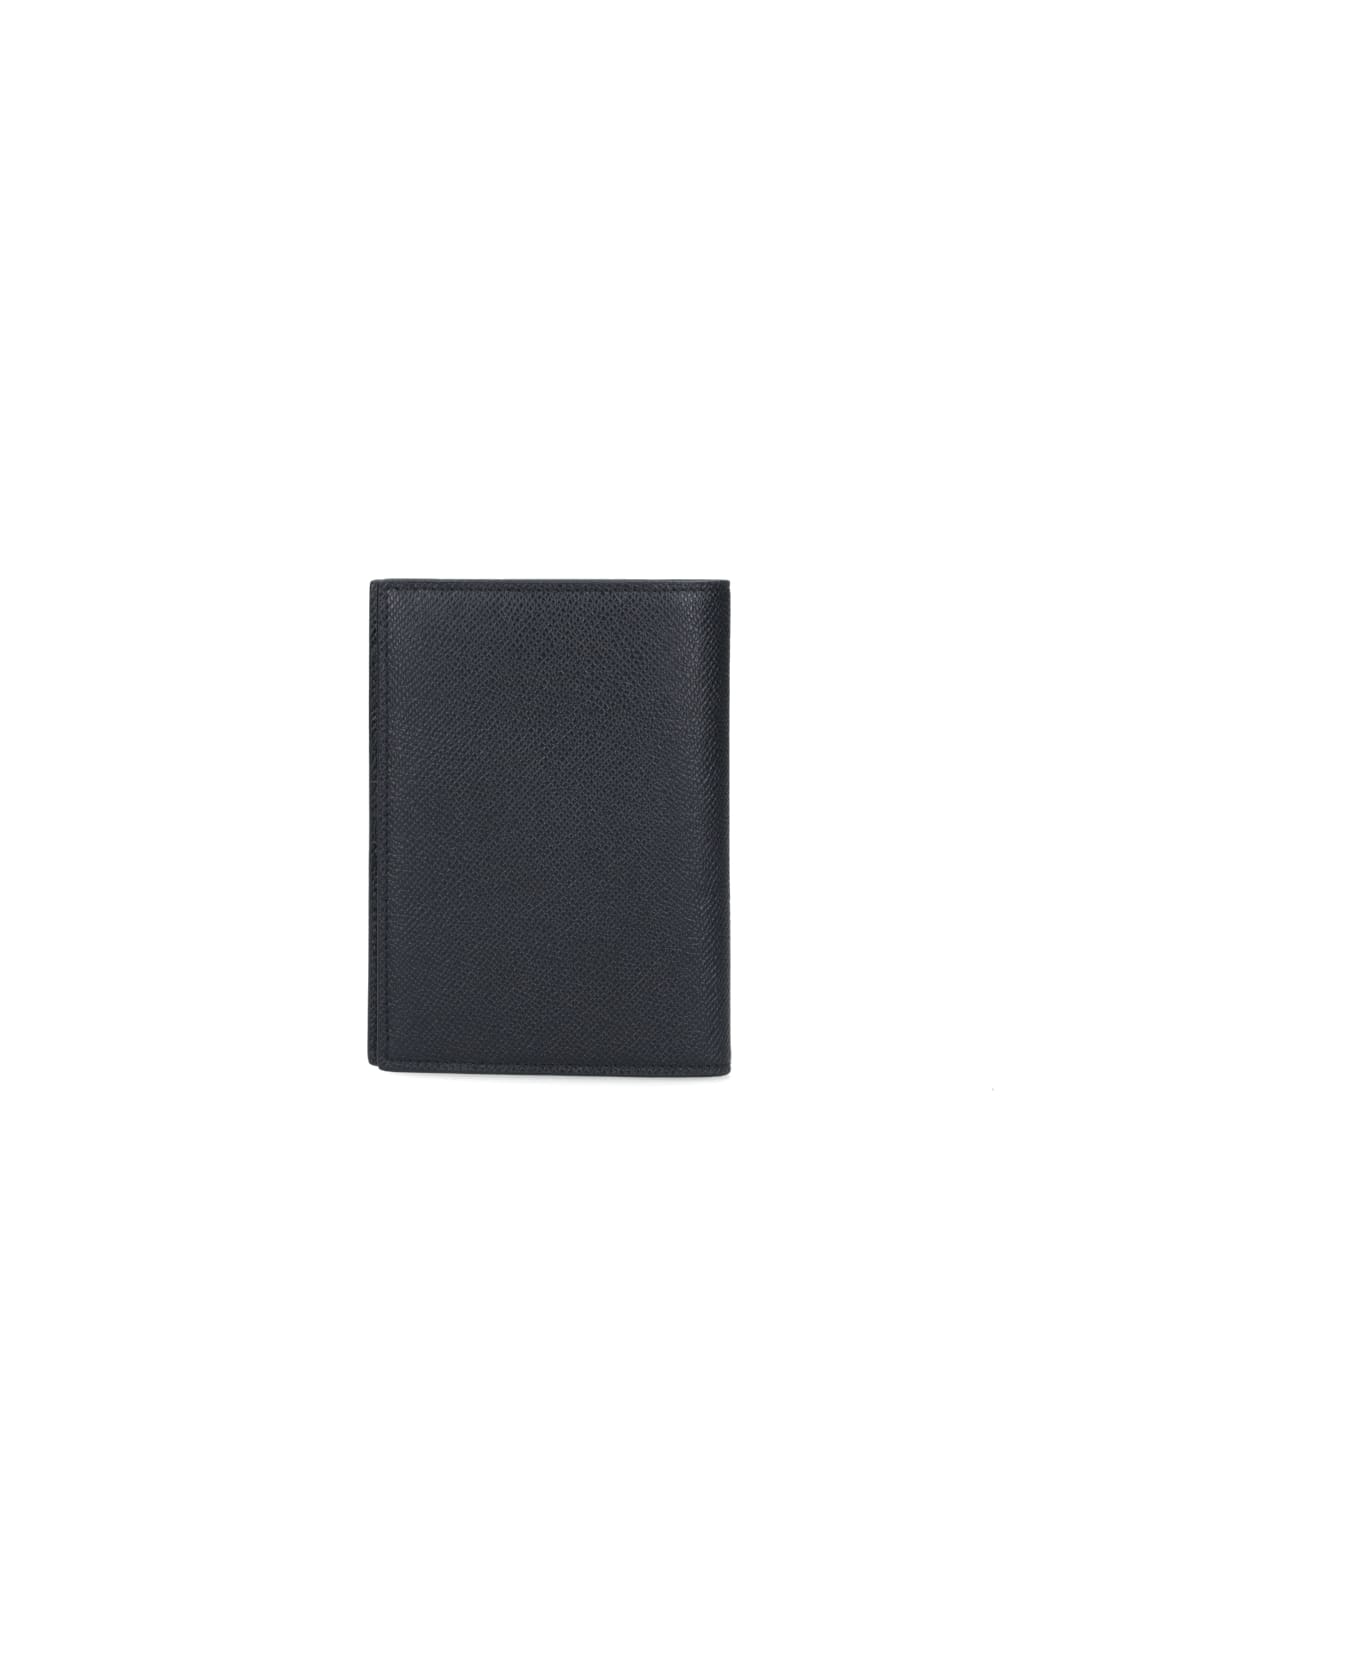 Tom Ford Logo Card Holder - Black   財布